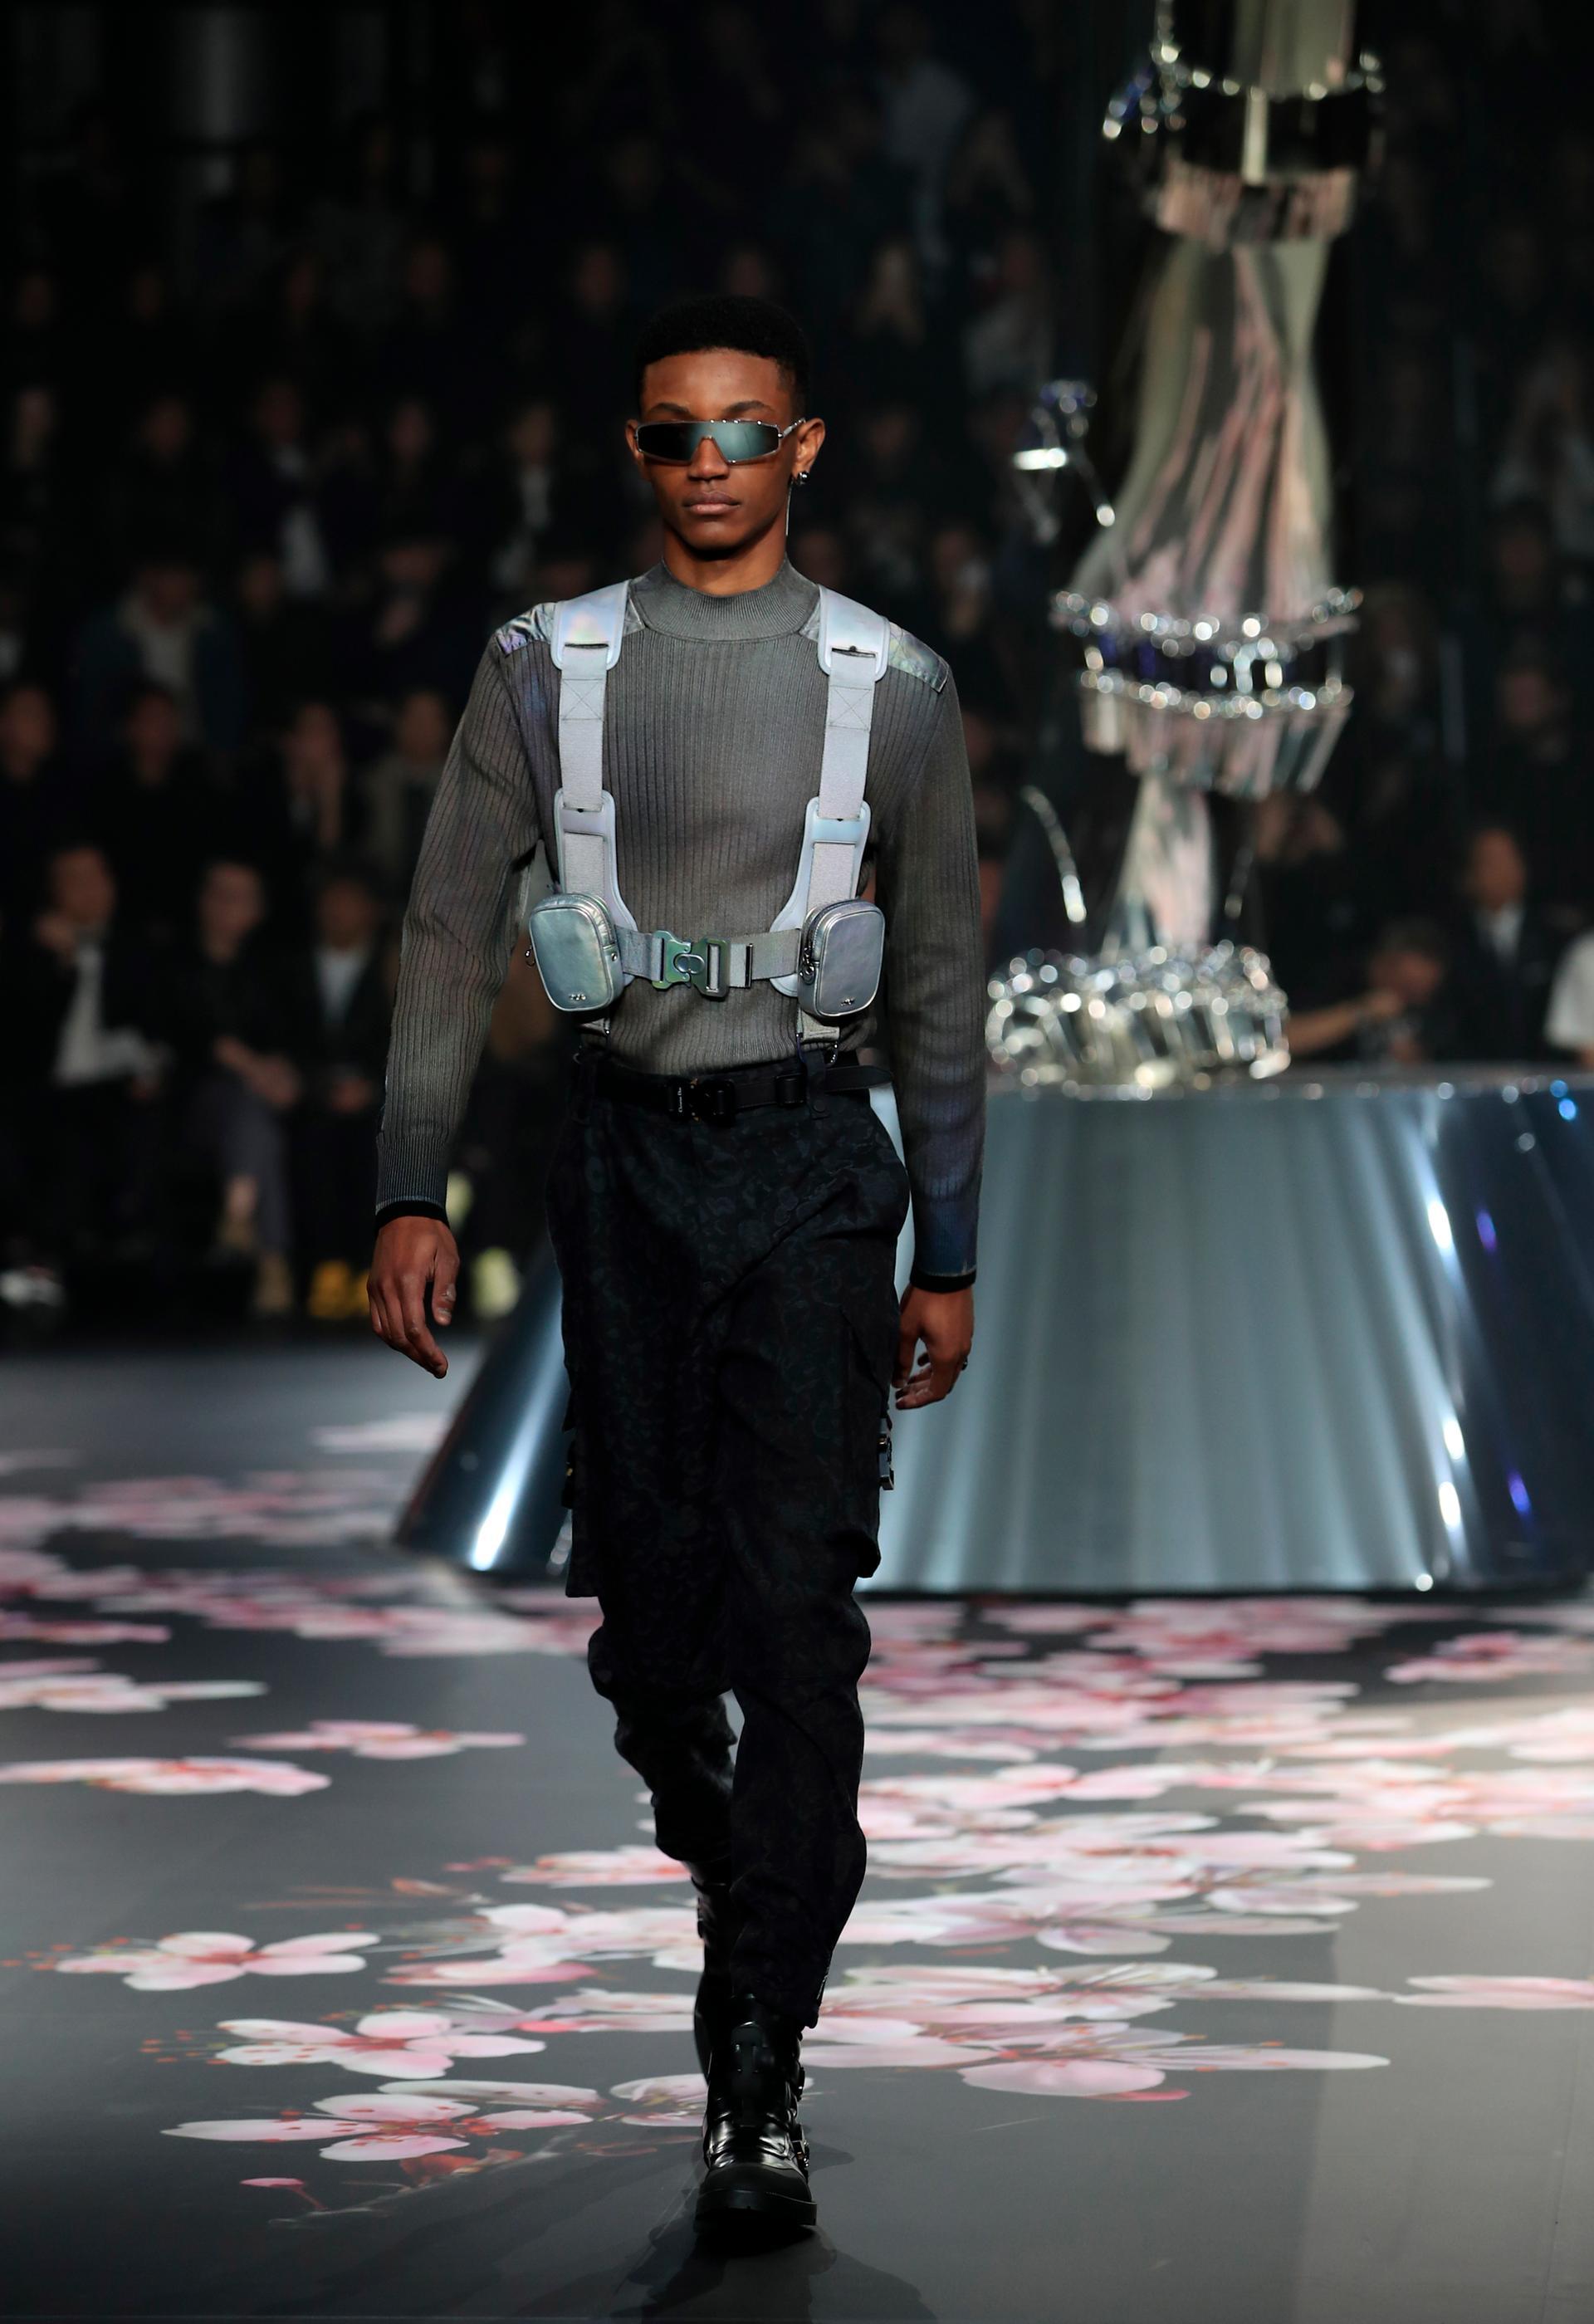 Five Takeaways from Kim Jones' Dior Show in Tokyo